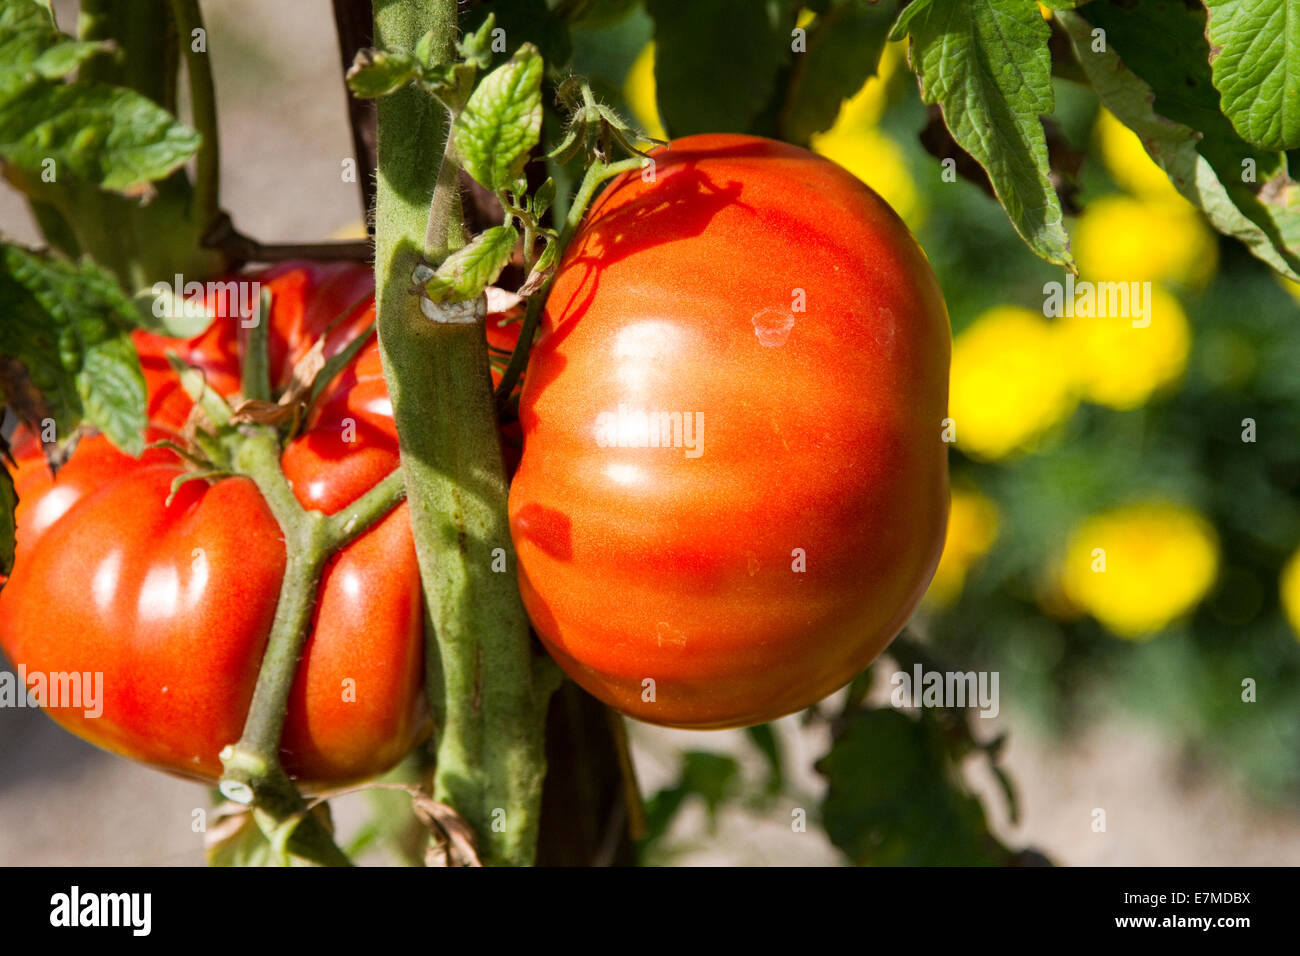 Tomato grown in an organic vegetable garden Stock Photo